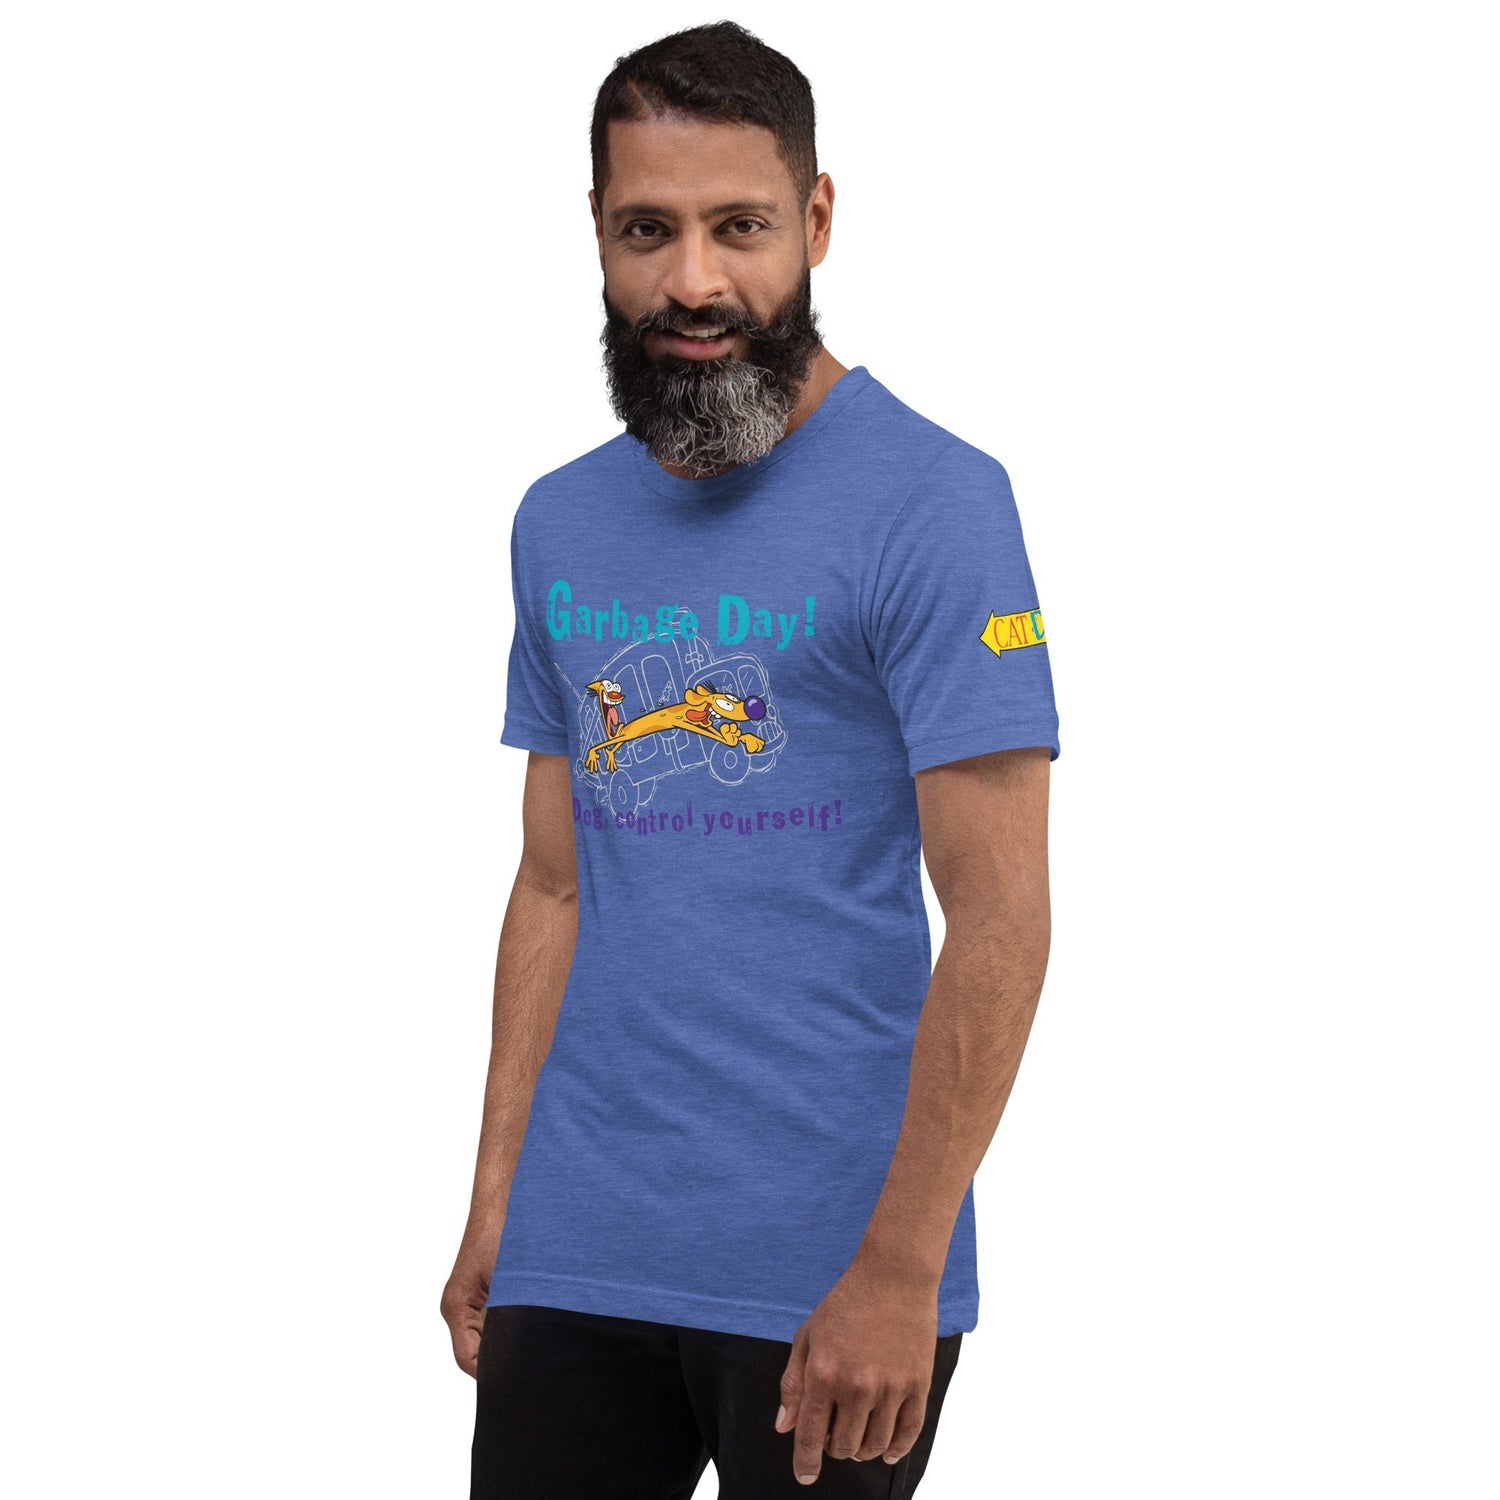 CatDog Garbage Day! Adult Short Sleeve T - Shirt - Paramount Shop